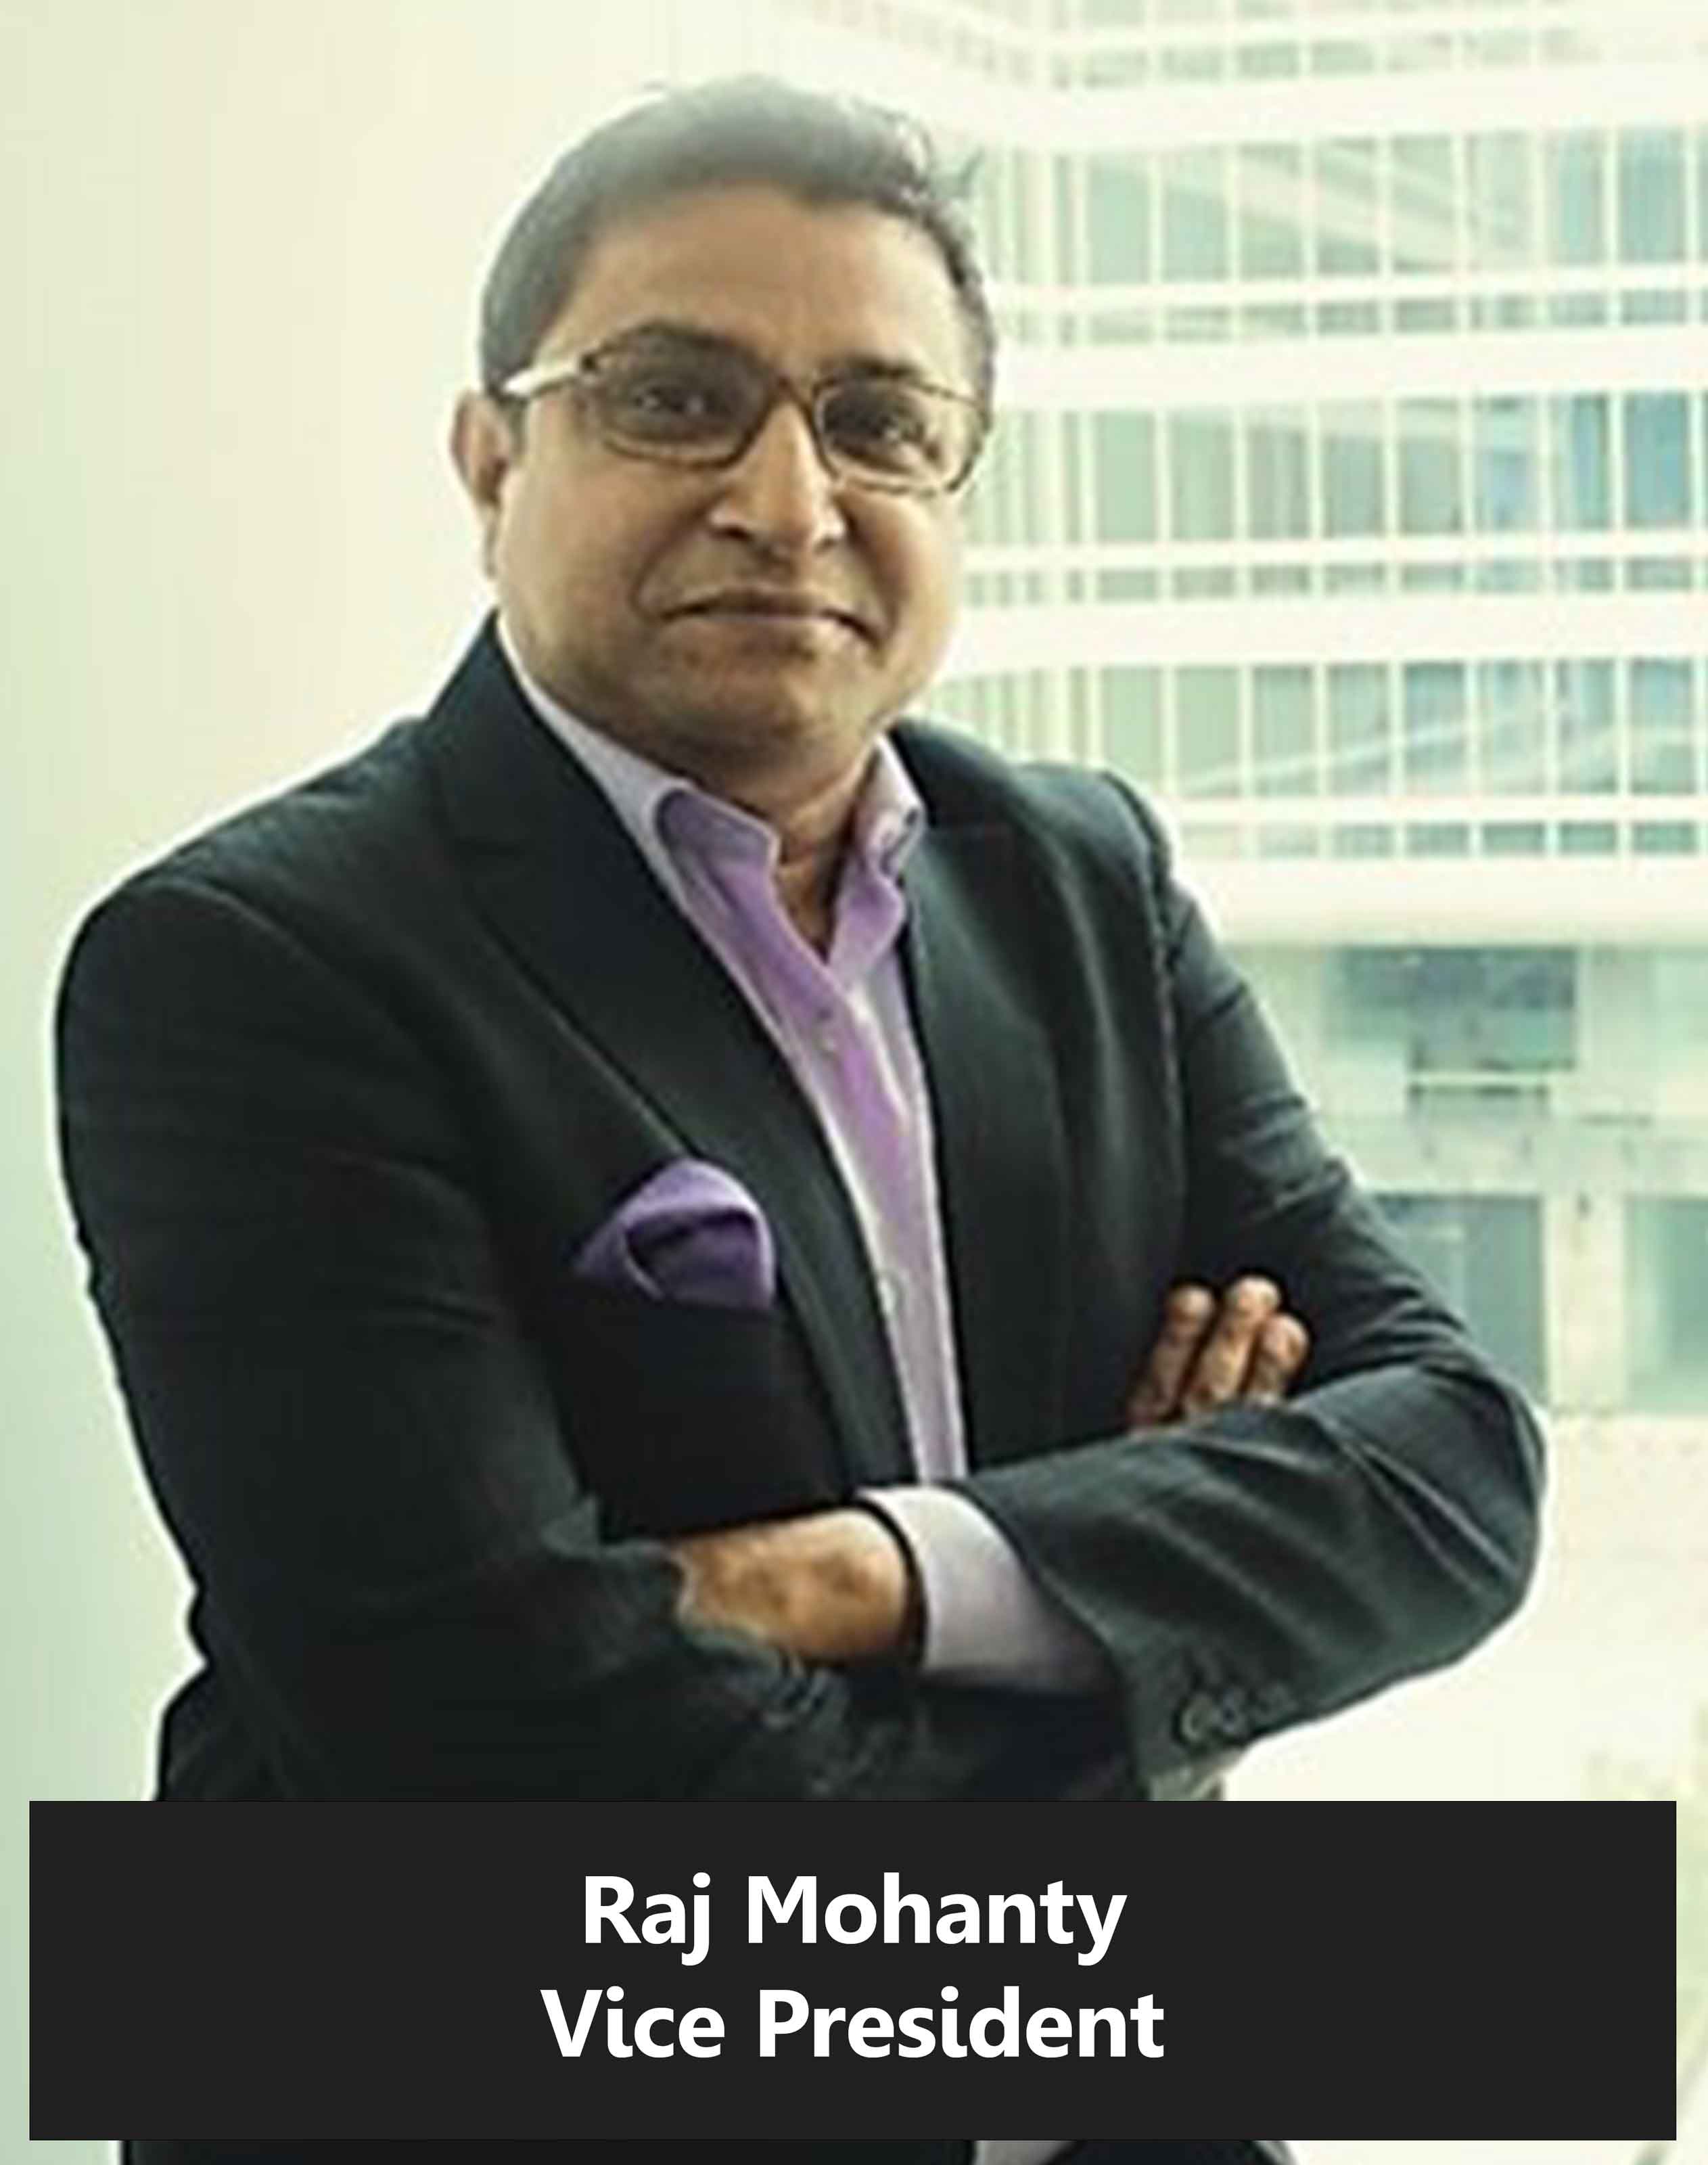 Raj Mohant, VP